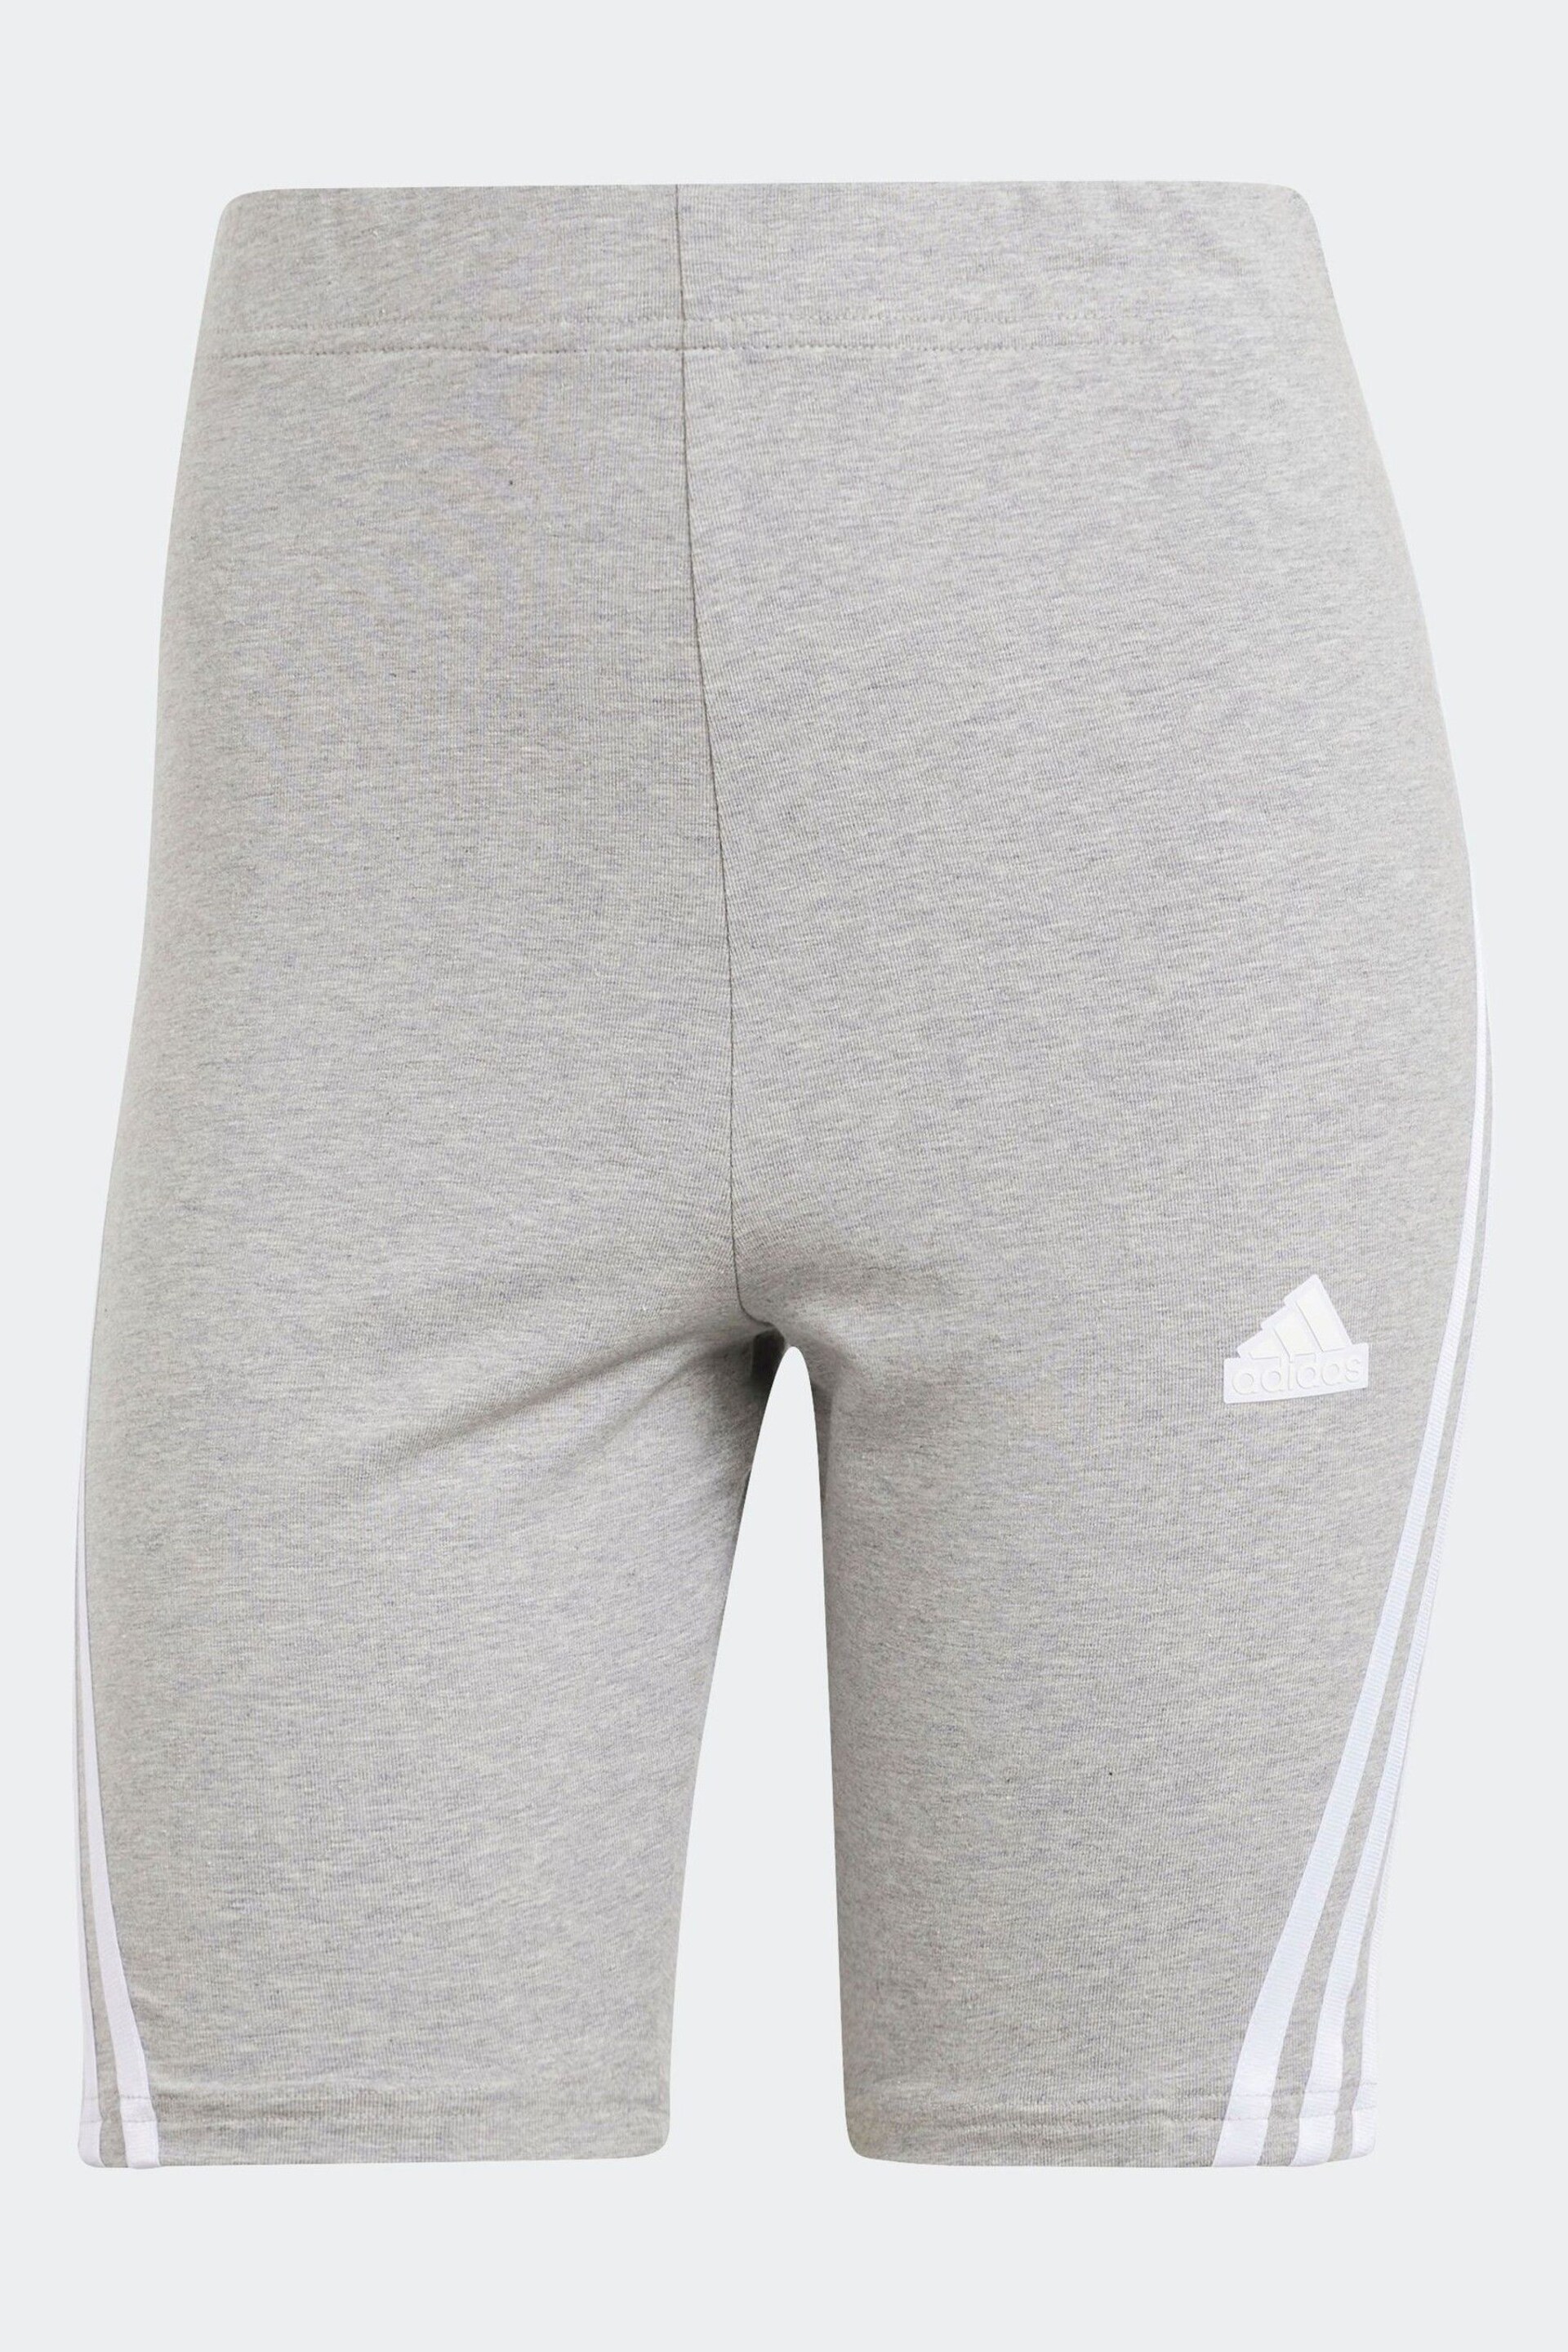 adidas Grey Sportswear Future Icons 3 Stripes Bike Shorts - Image 6 of 6